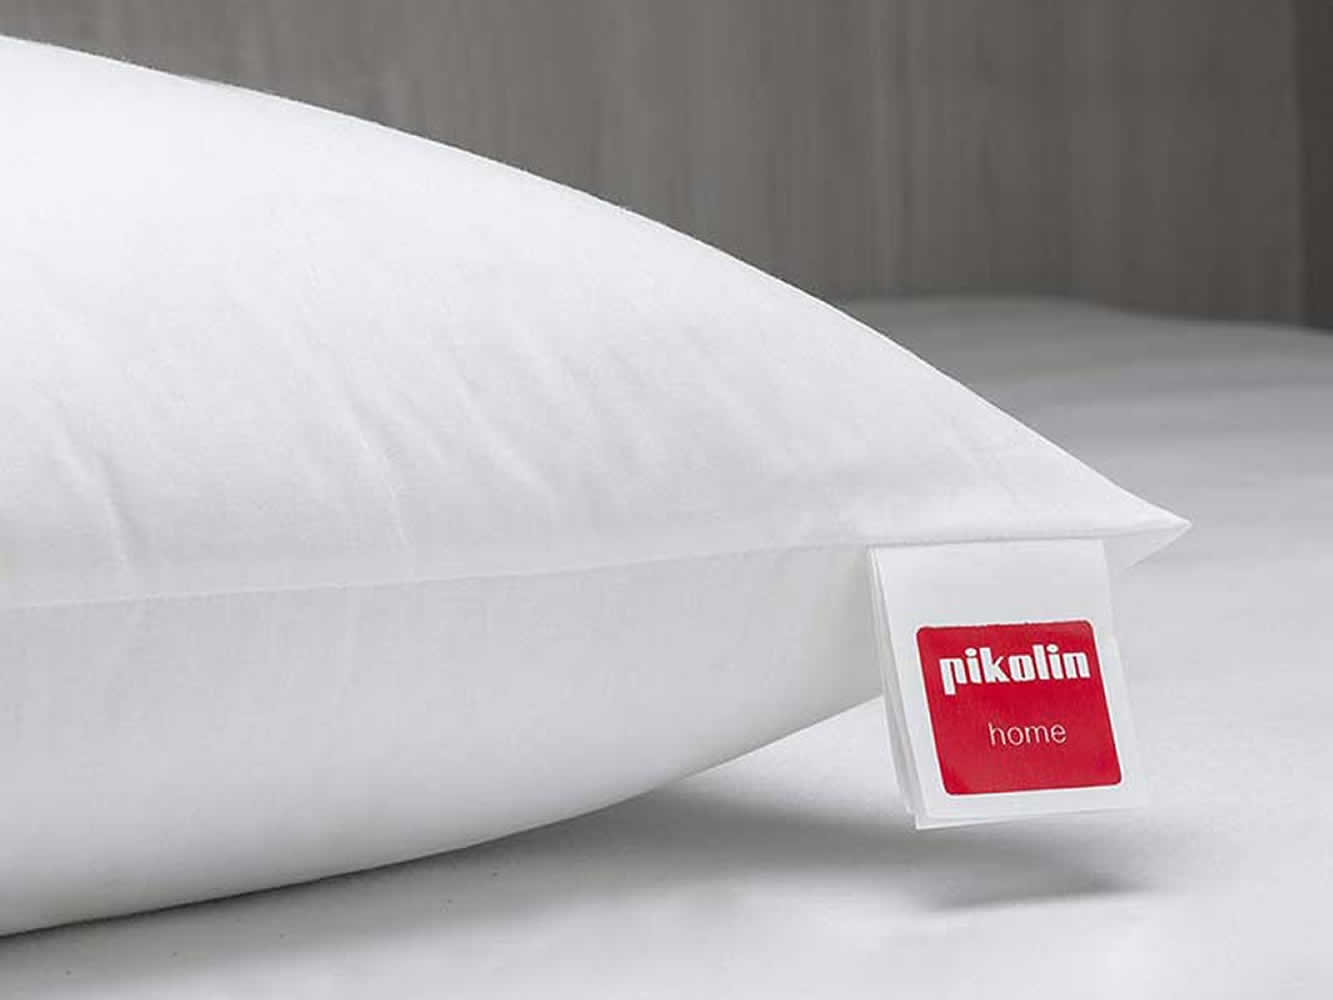 100% Cotton Pillow